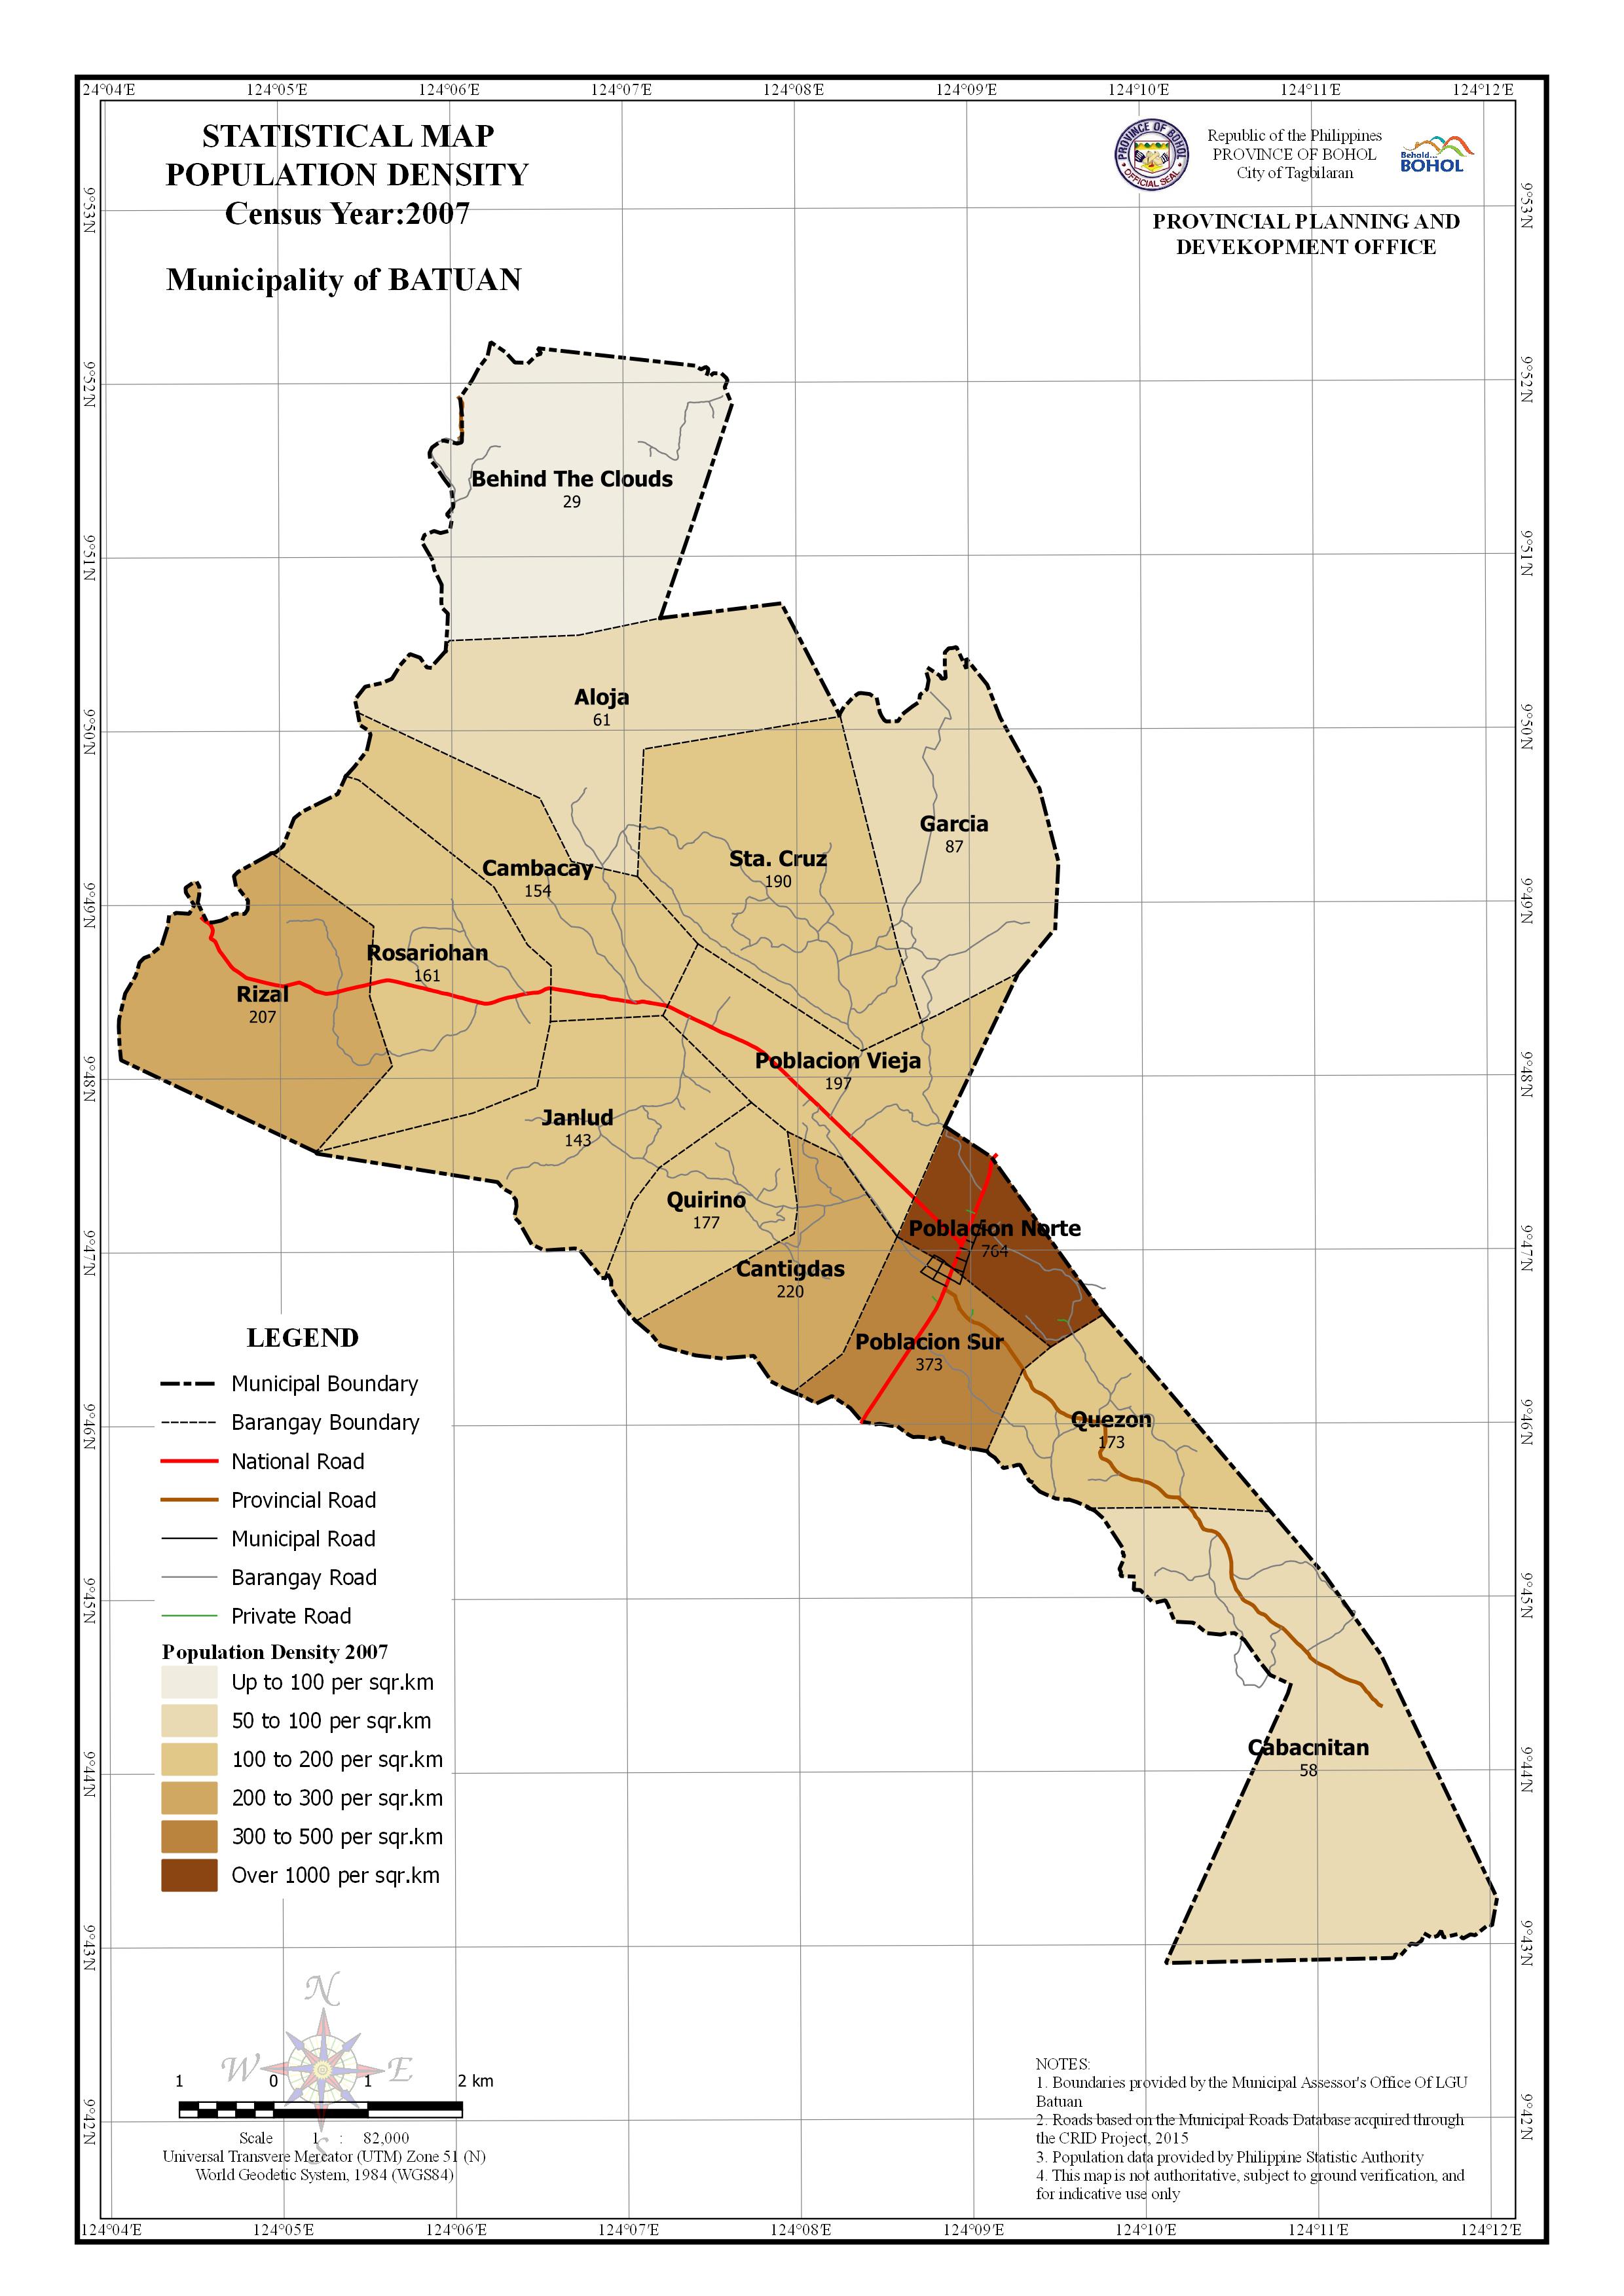 Population Density 2007 Map